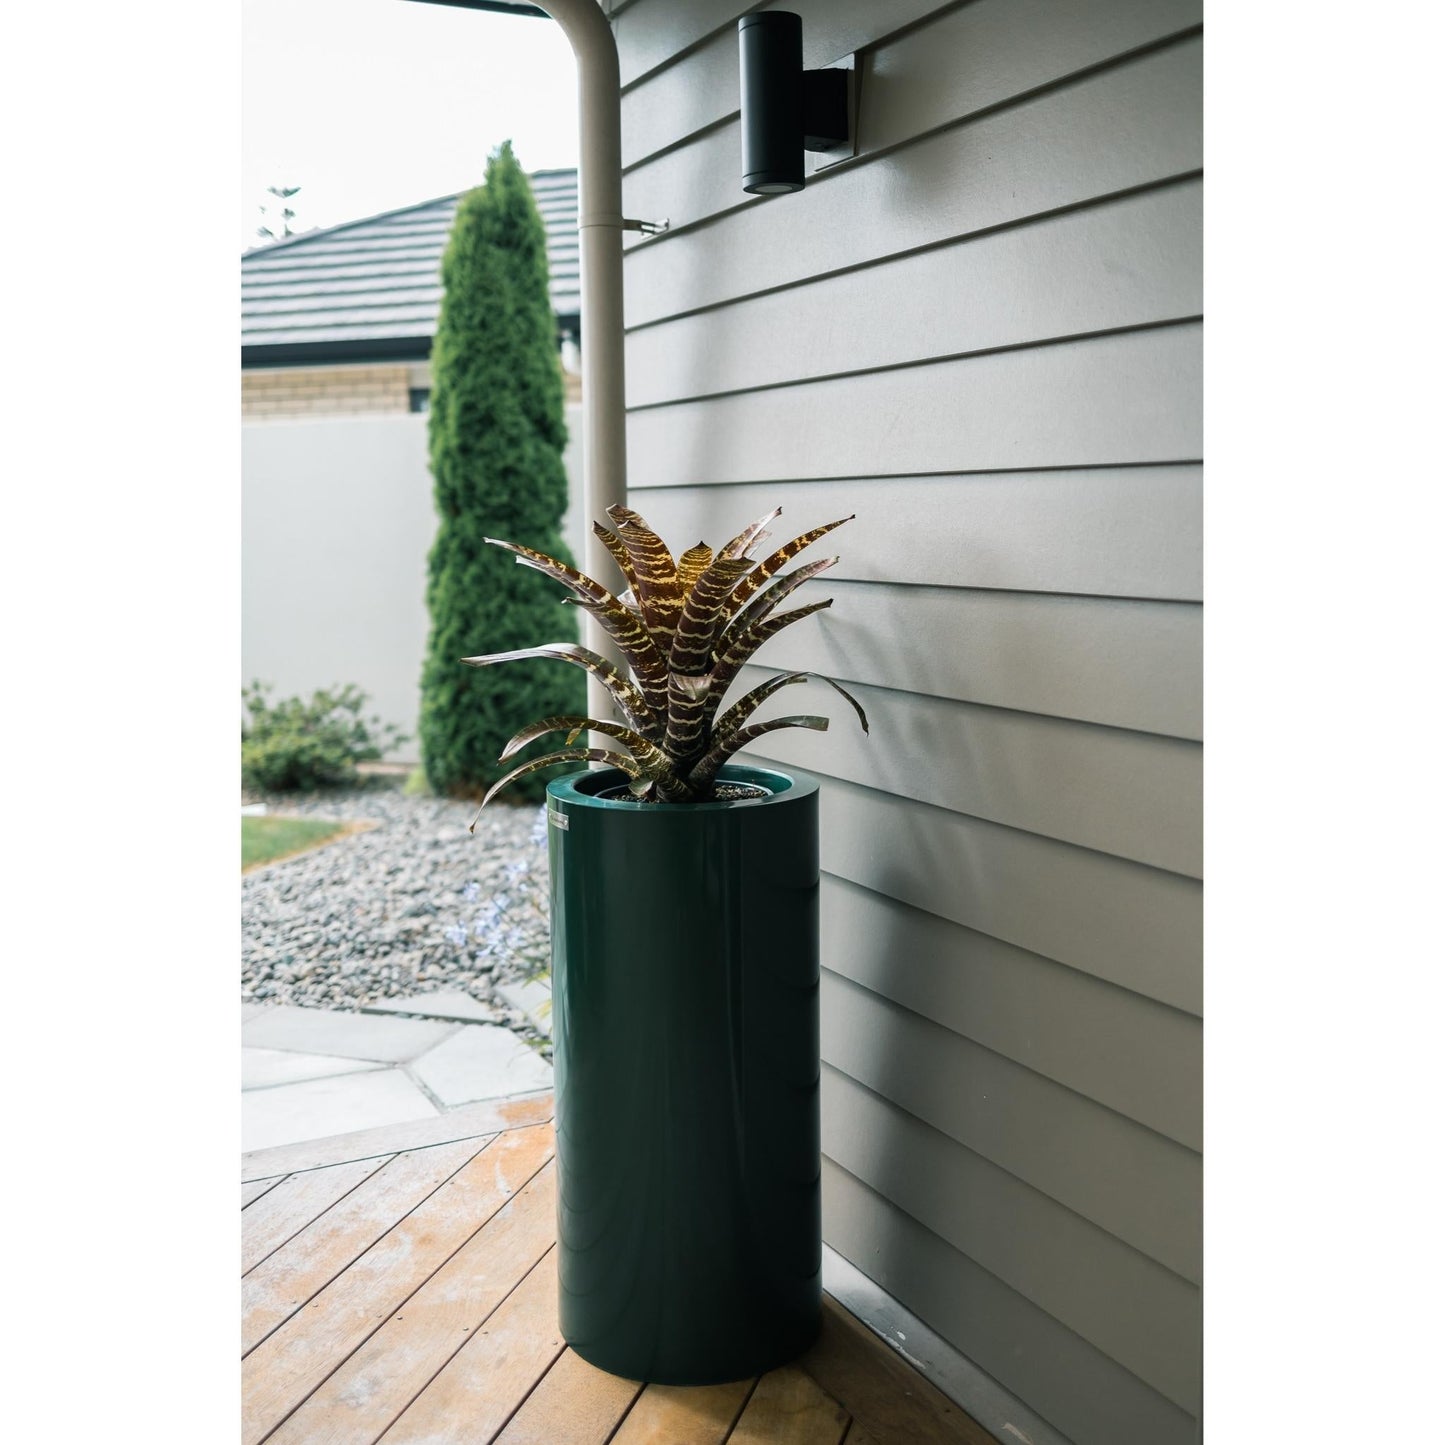 A cylinder planter pot sitting on a wooden deck beside a house.